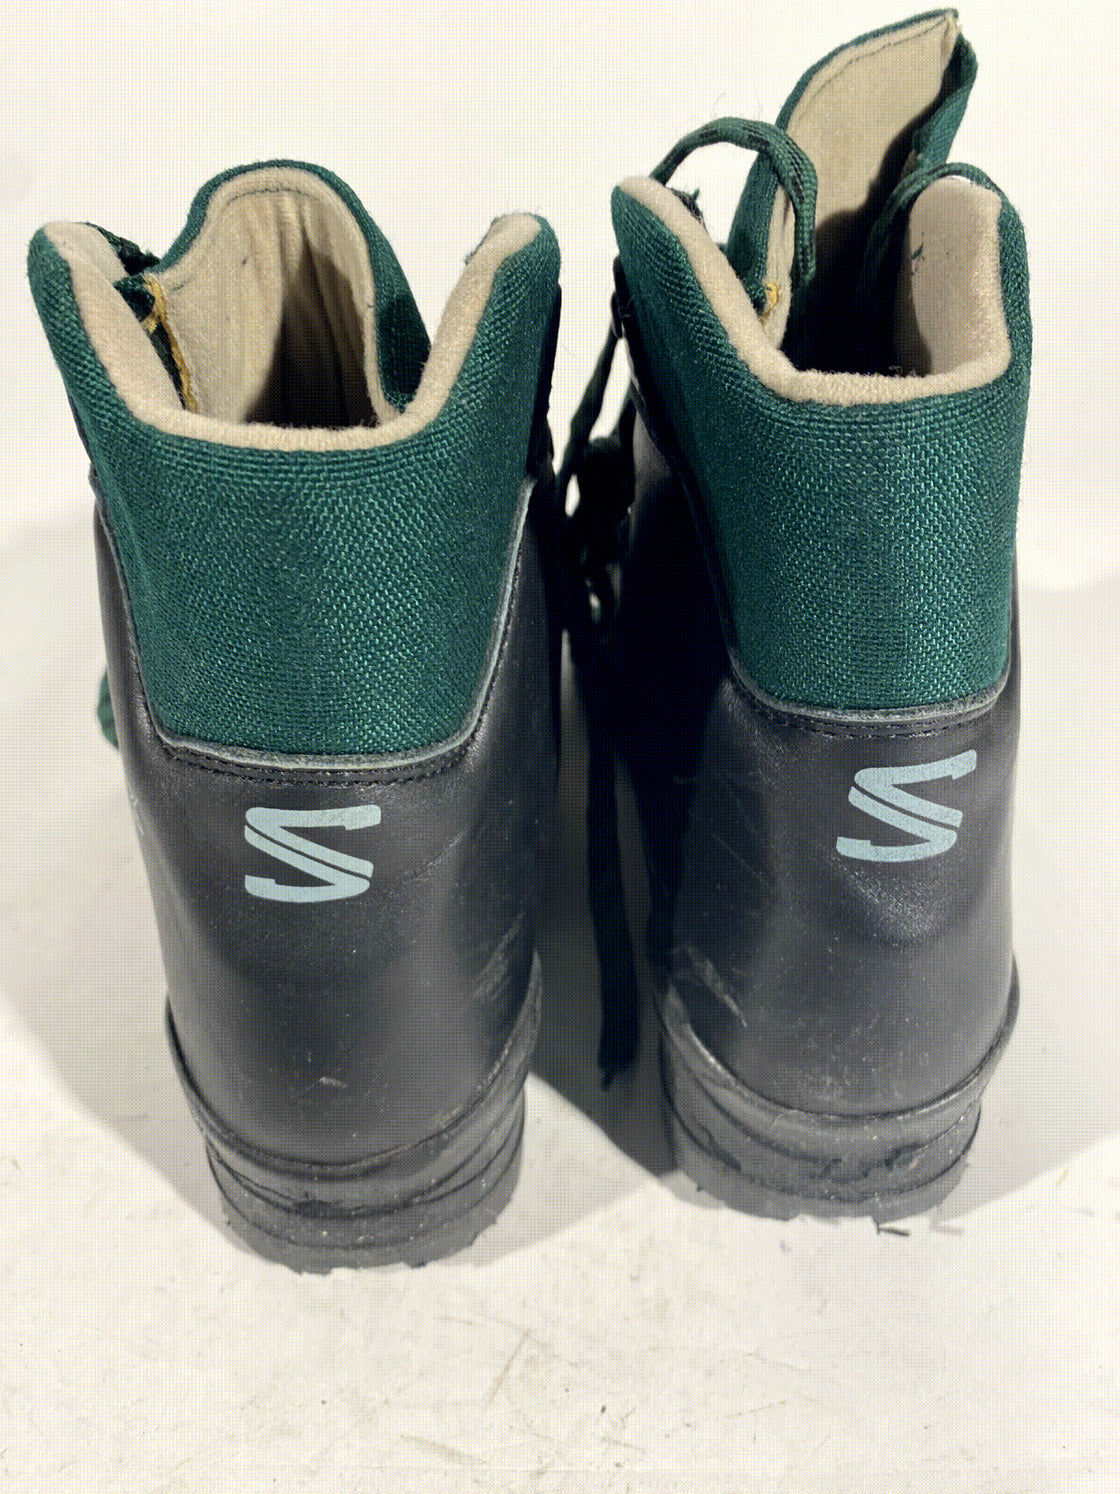 Salomon Back Country Nordic Ski Boots Size EU44 US10 X-Adventure binding